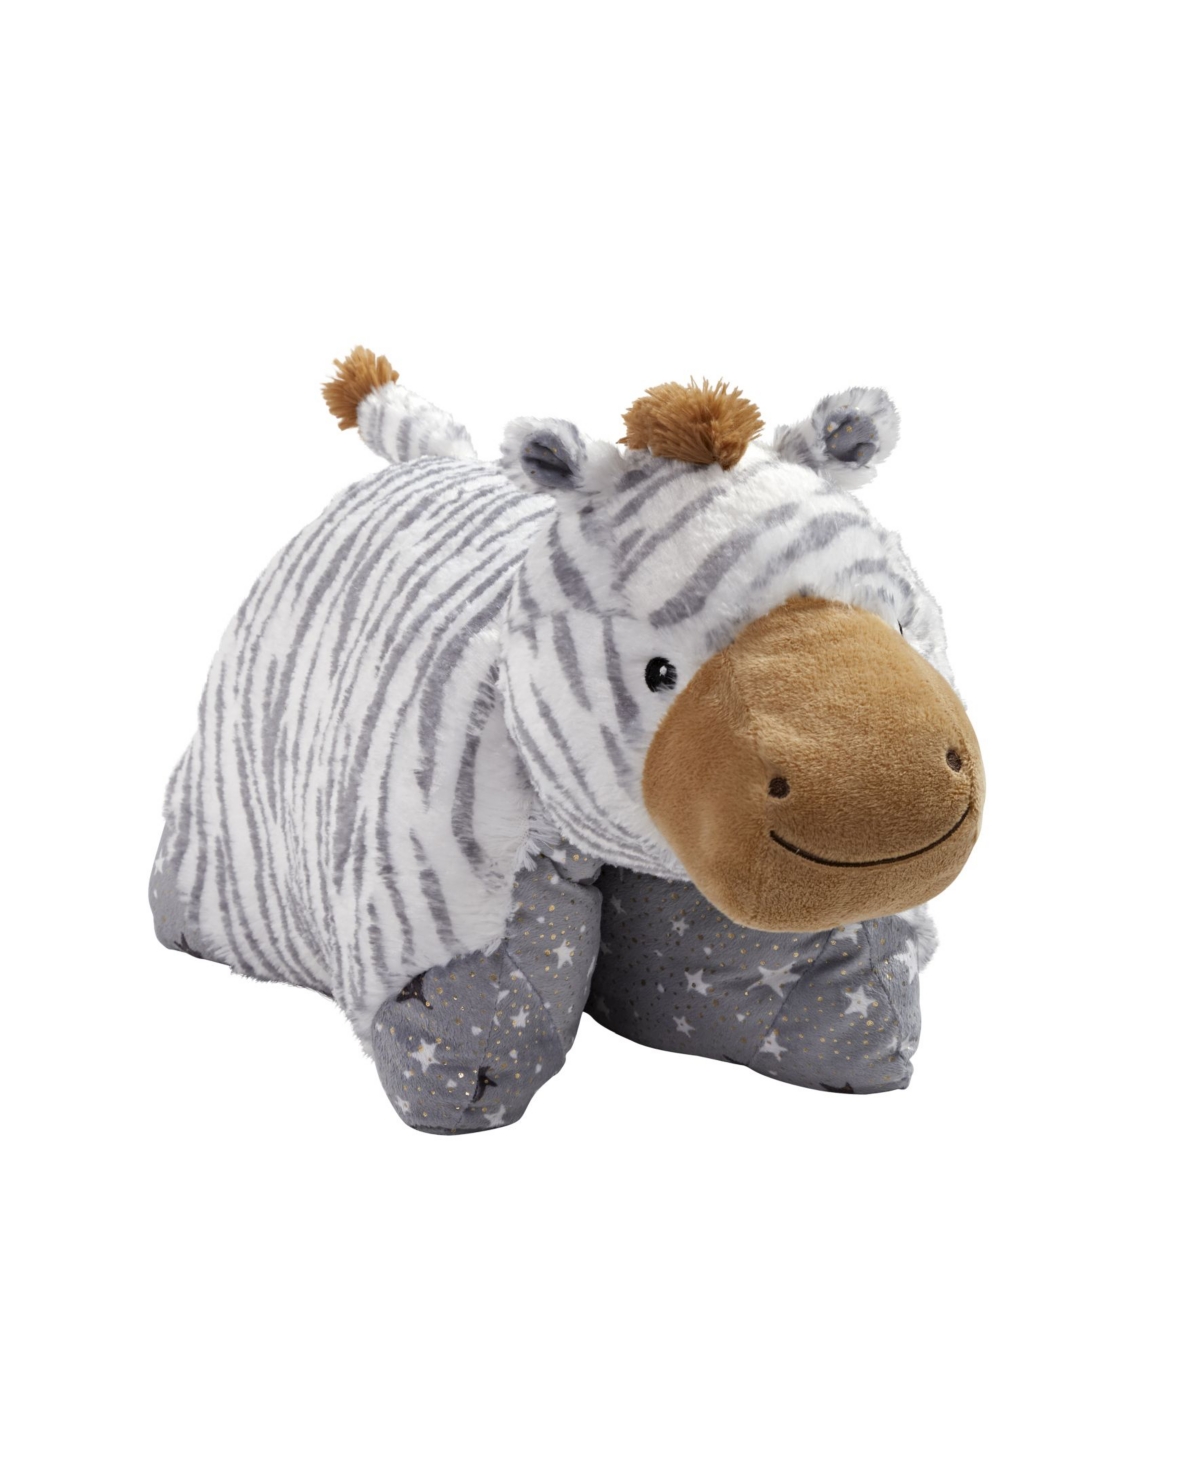 Pillow Pets Naturally Comfy Zebra Plush Stuffed Animal Plush Toy In Gray